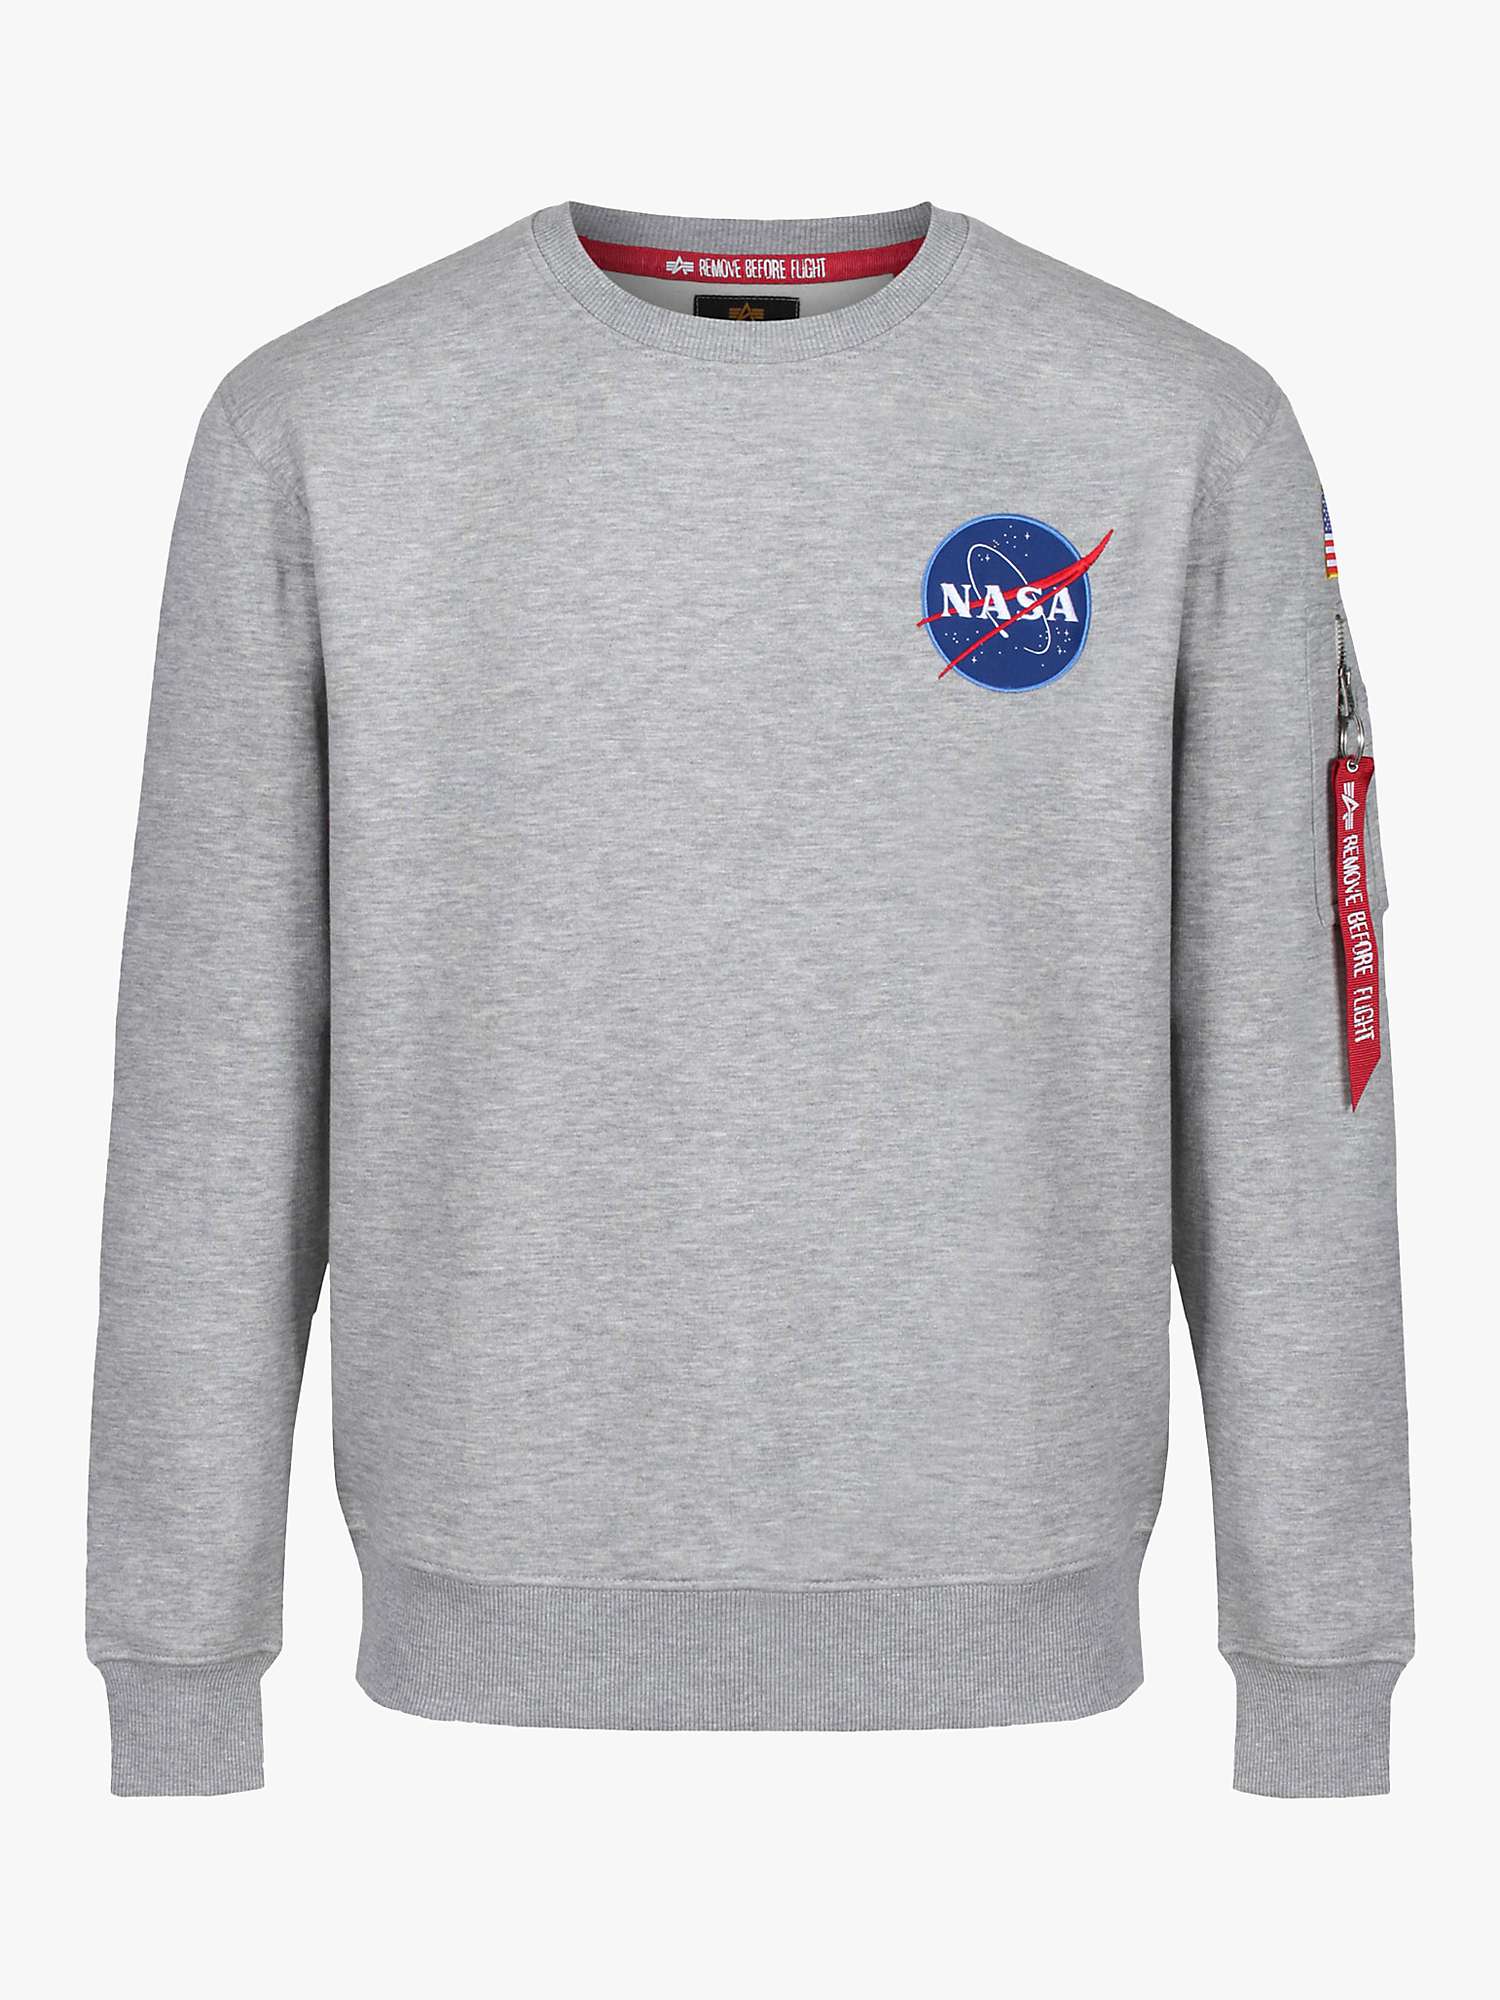 Buy Alpha Industries X NASA Space Shuttle Logo Sweatshirt Online at johnlewis.com